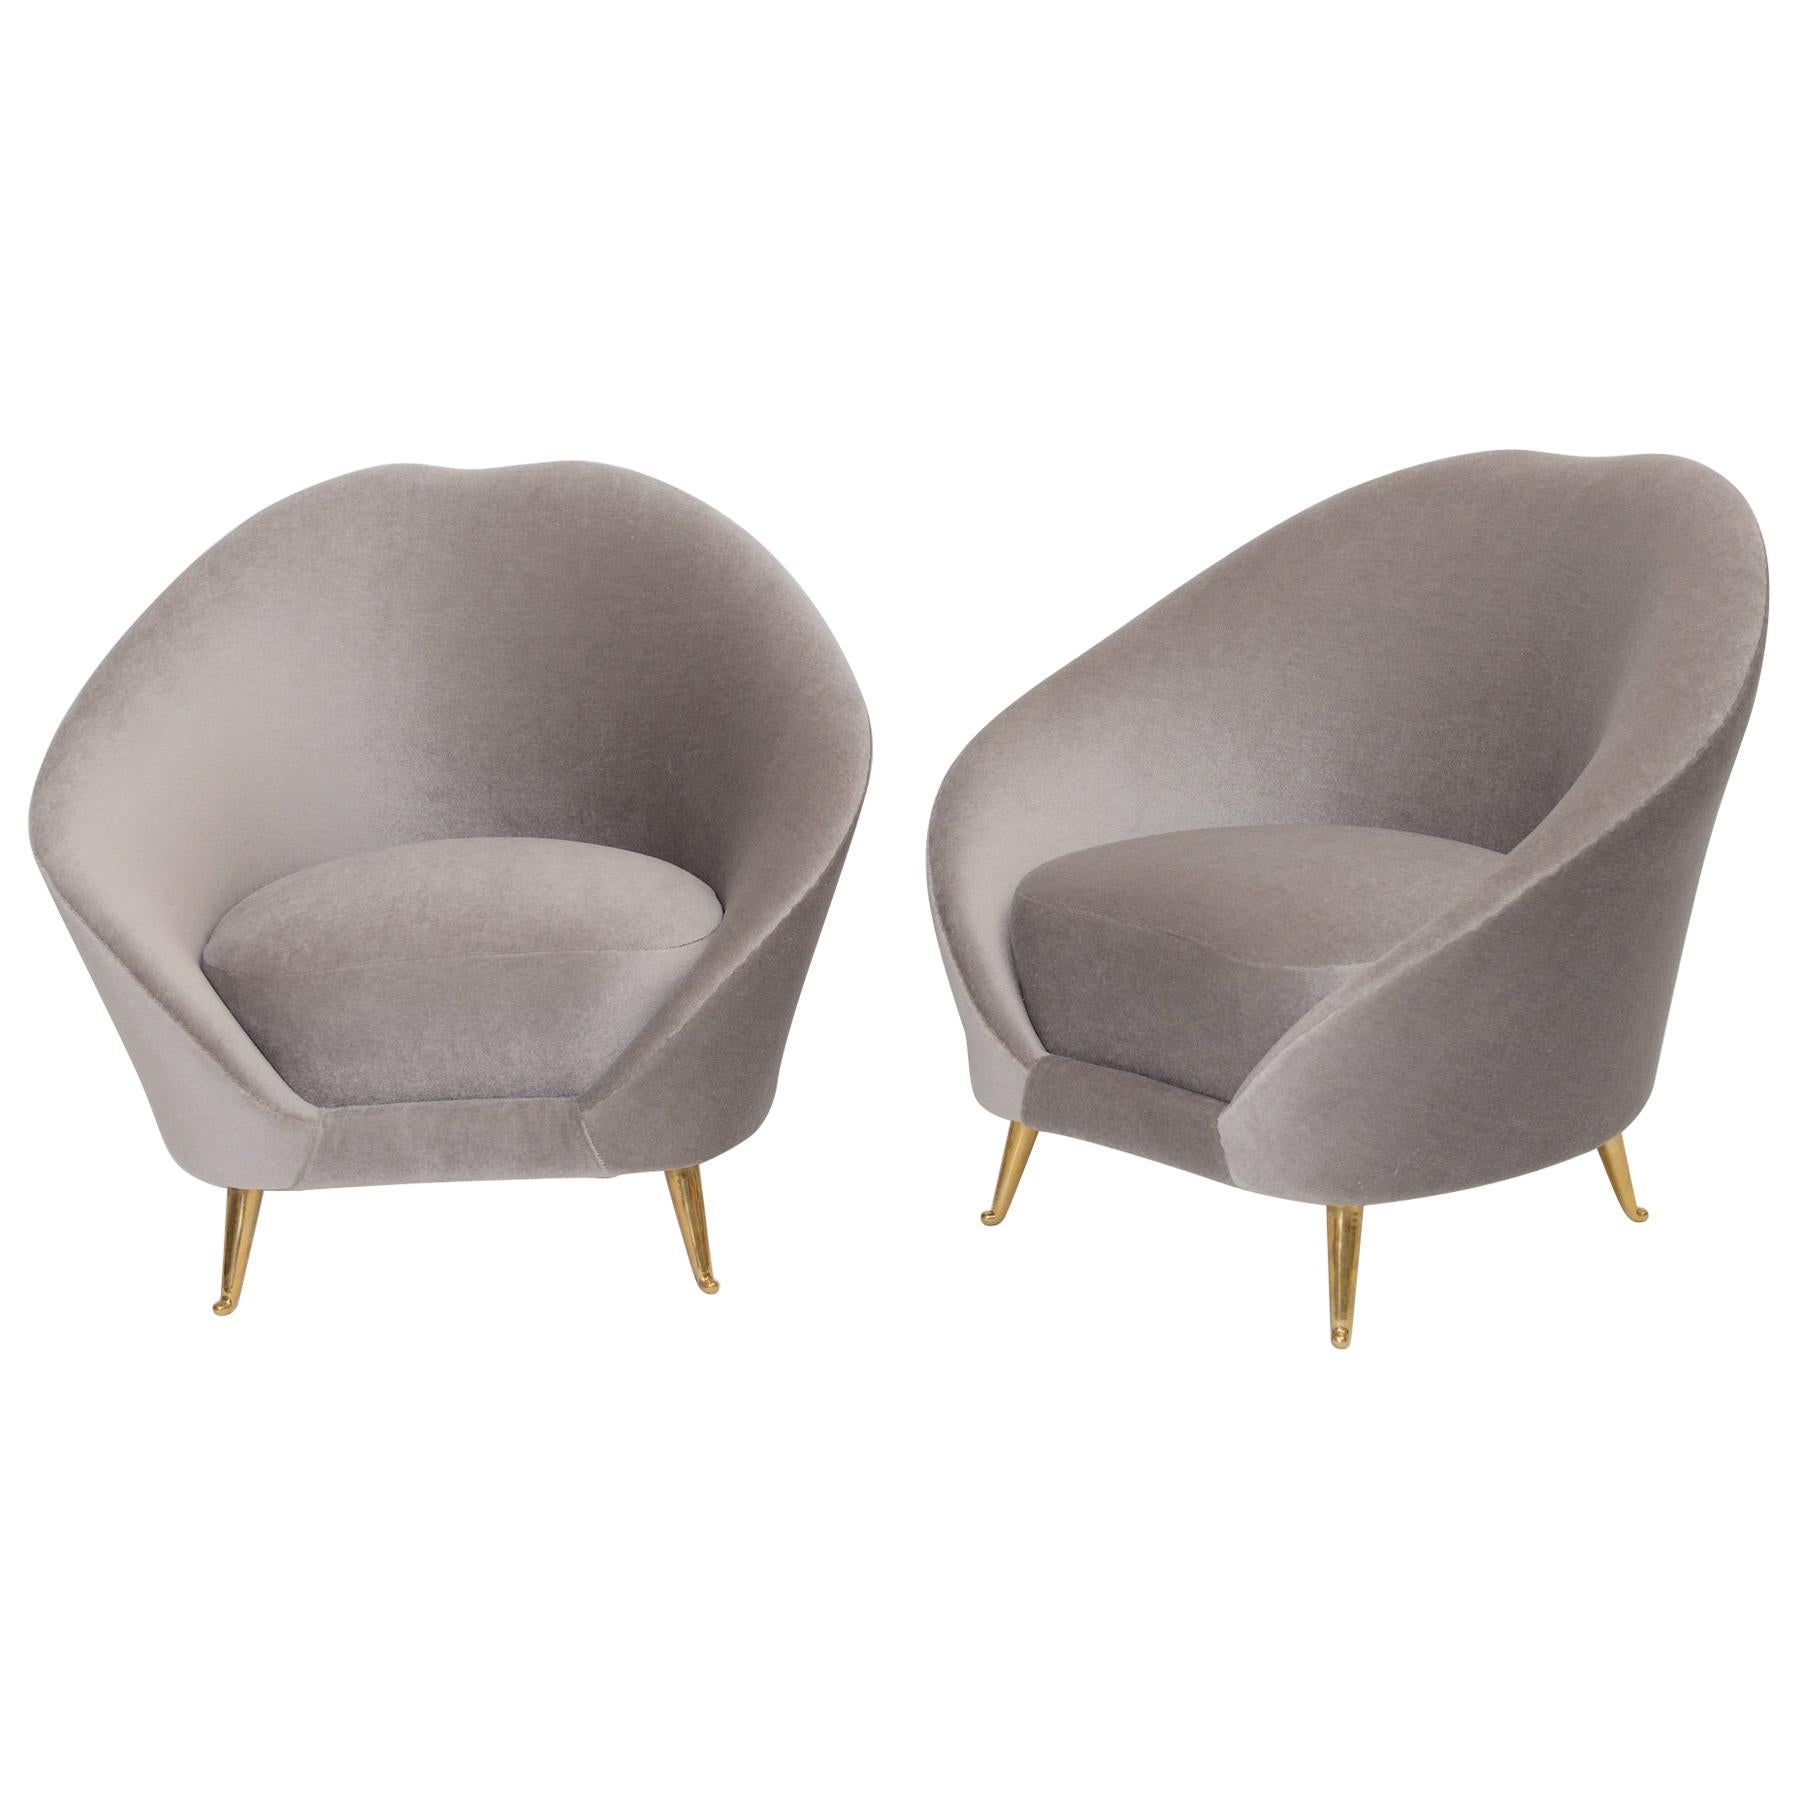 Pair of elegantly curved Federico Munari chairs c1950